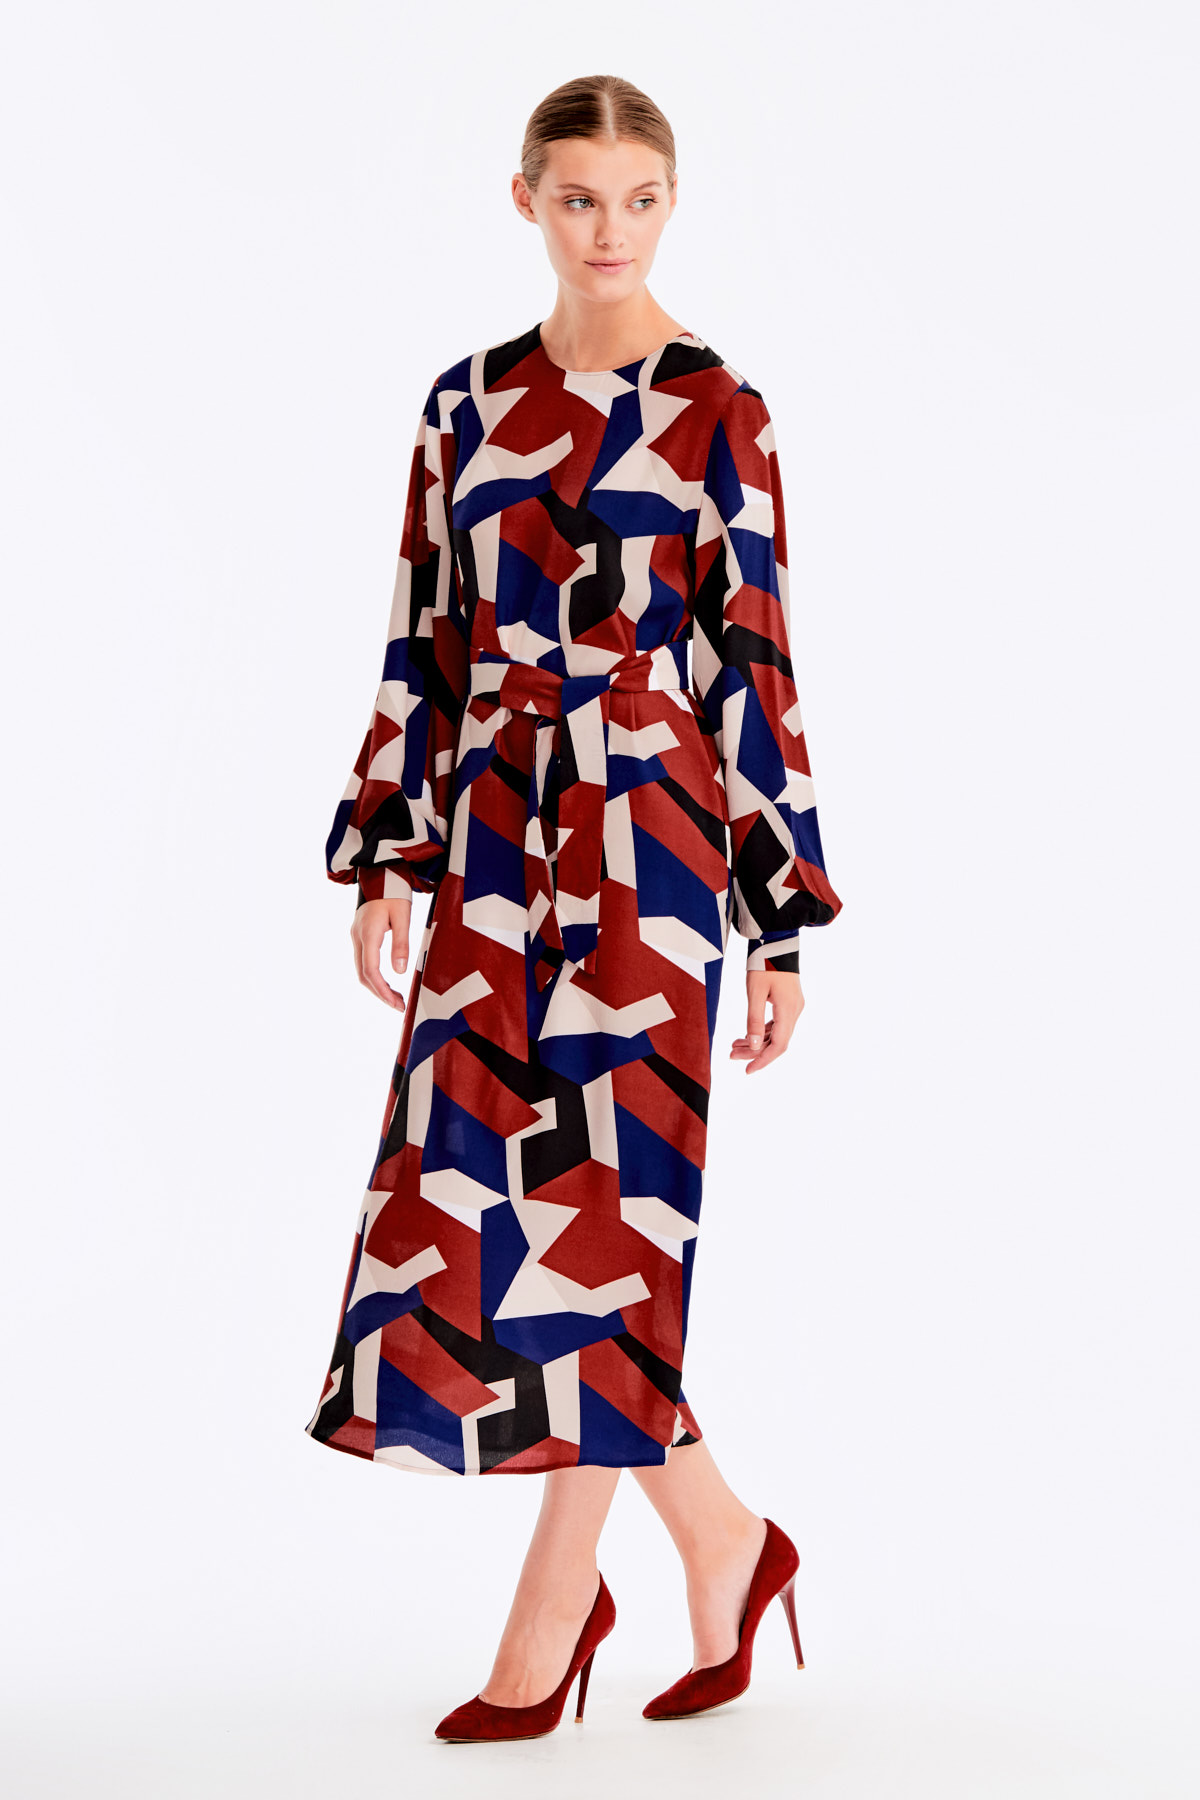 Free midi dress with variegated geometric print ¶¶, photo 6